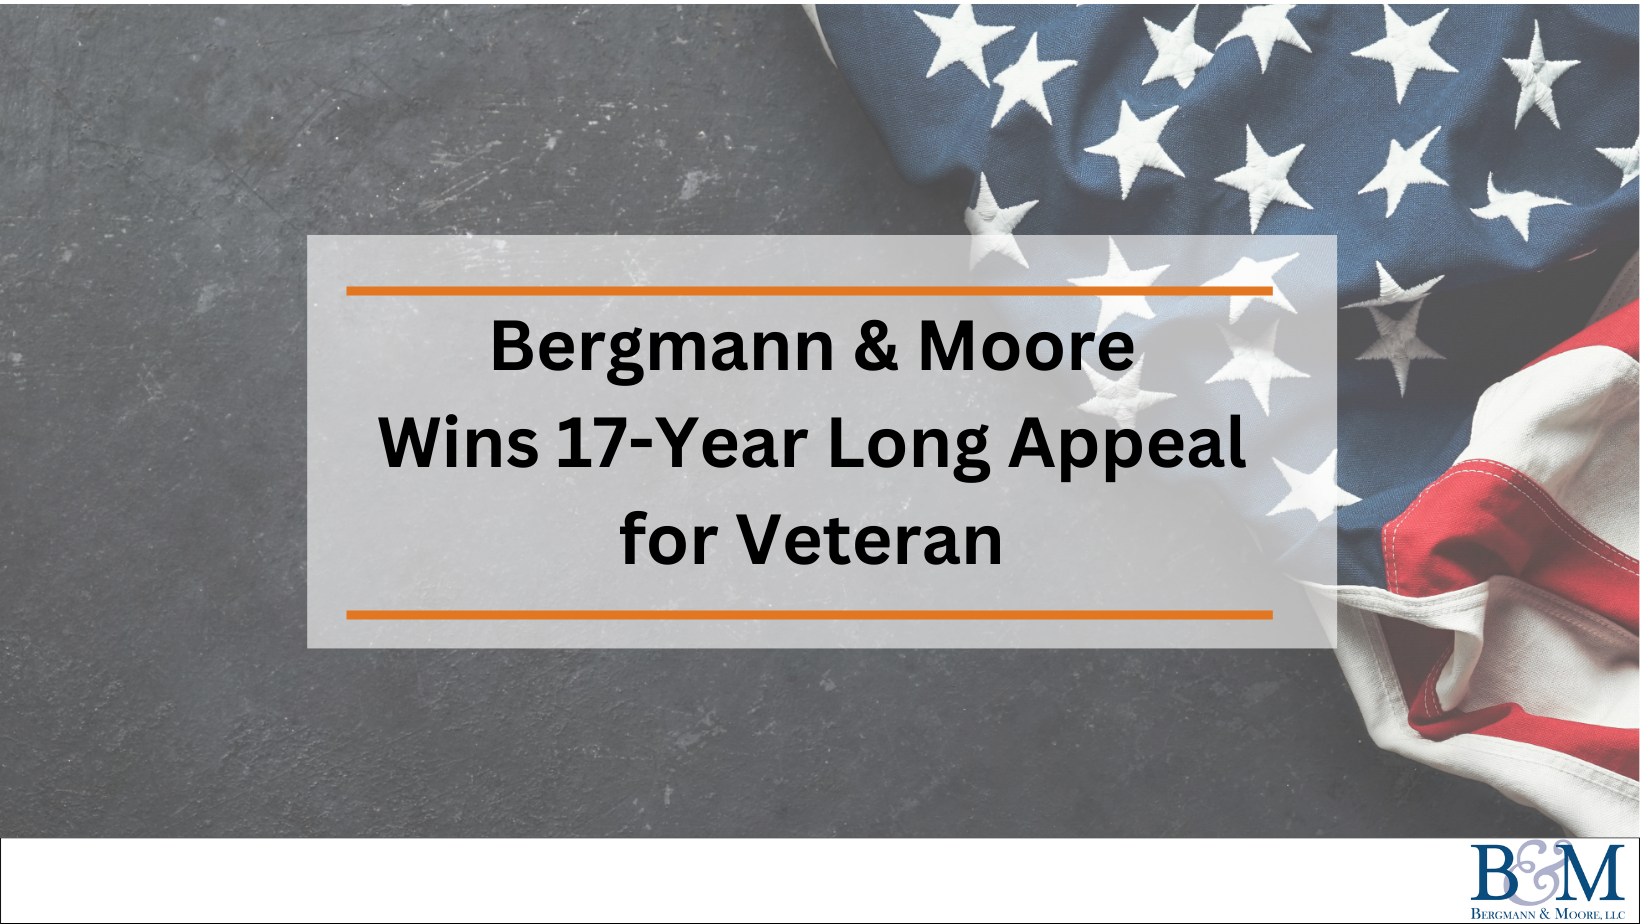 Bergmann & Moore Wins 17-Year Long Appeal for Veteran